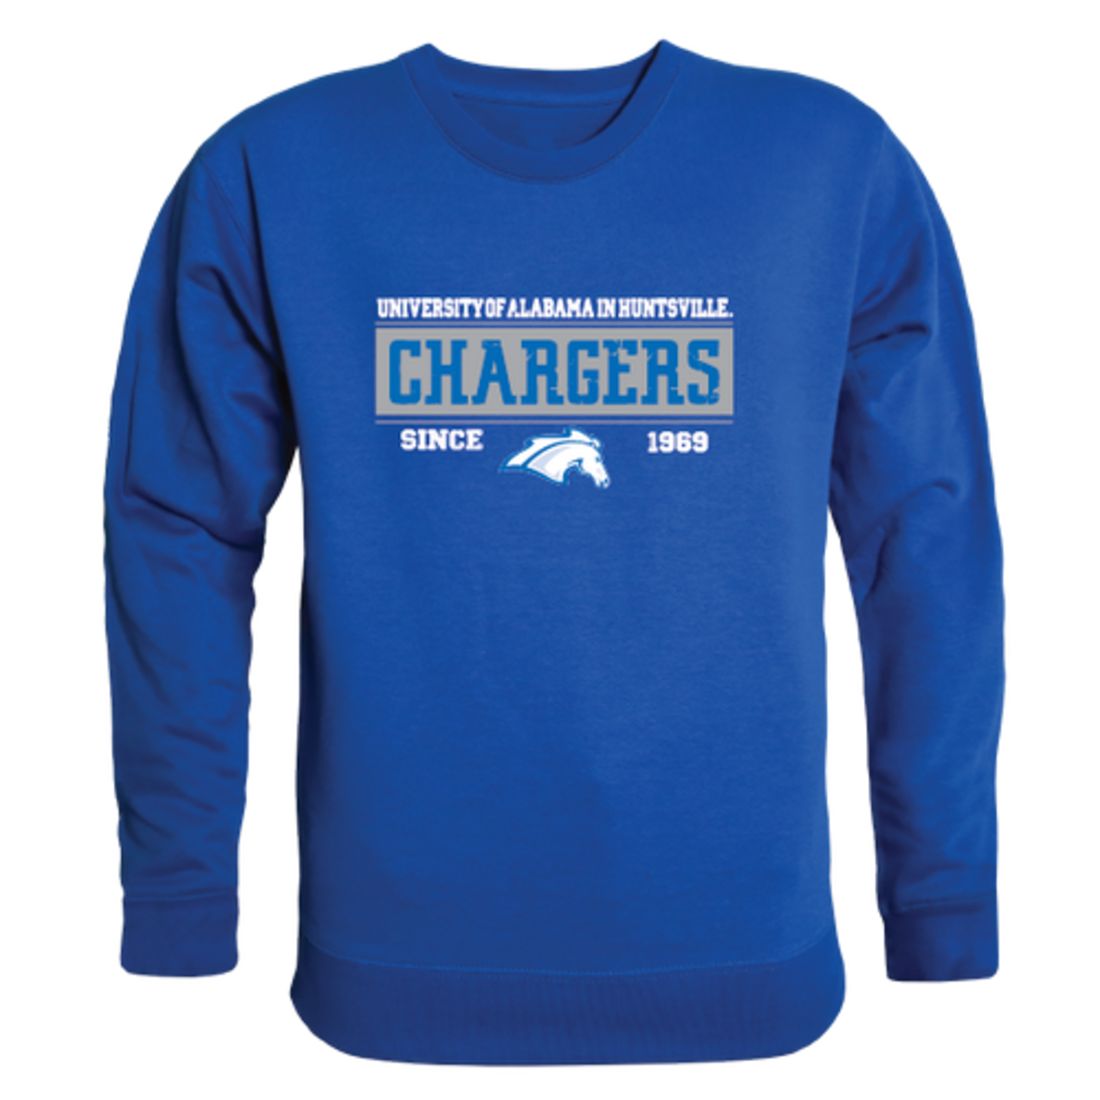 The-University-of-Alabama-in-Huntsville-Chargers-Established-Fleece-Crewneck-Pullover-Sweatshirt